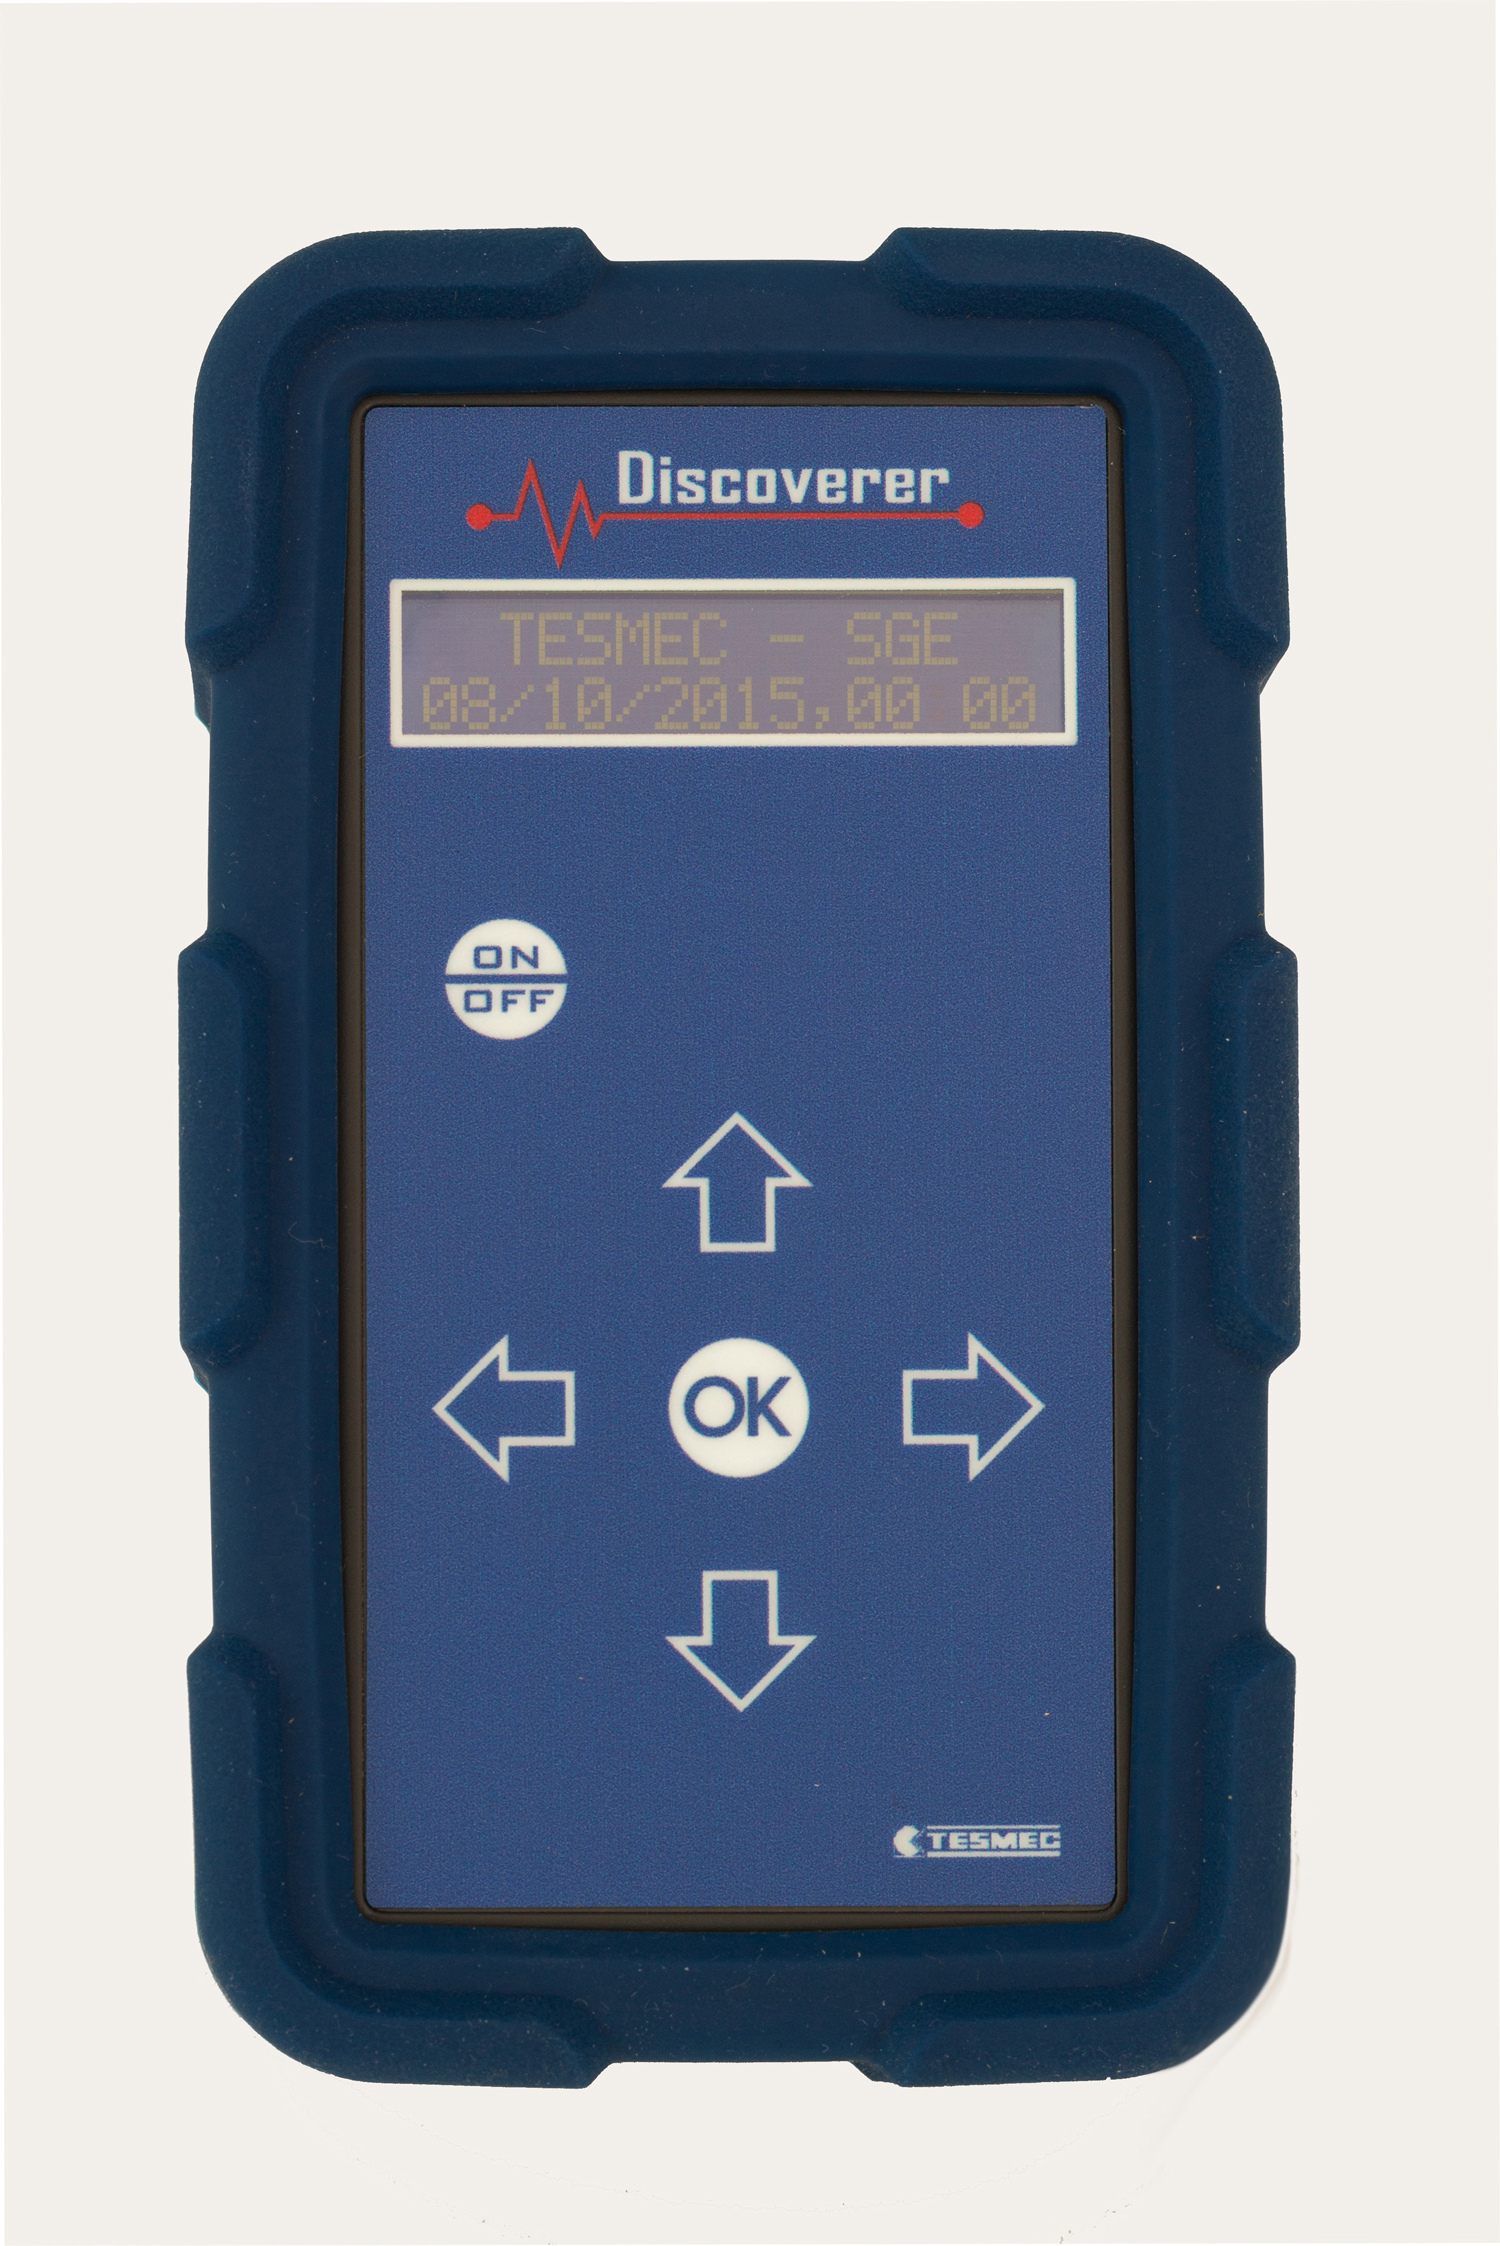 Portable Discoverer Fault Detector for rapid detenction of permanenet faults